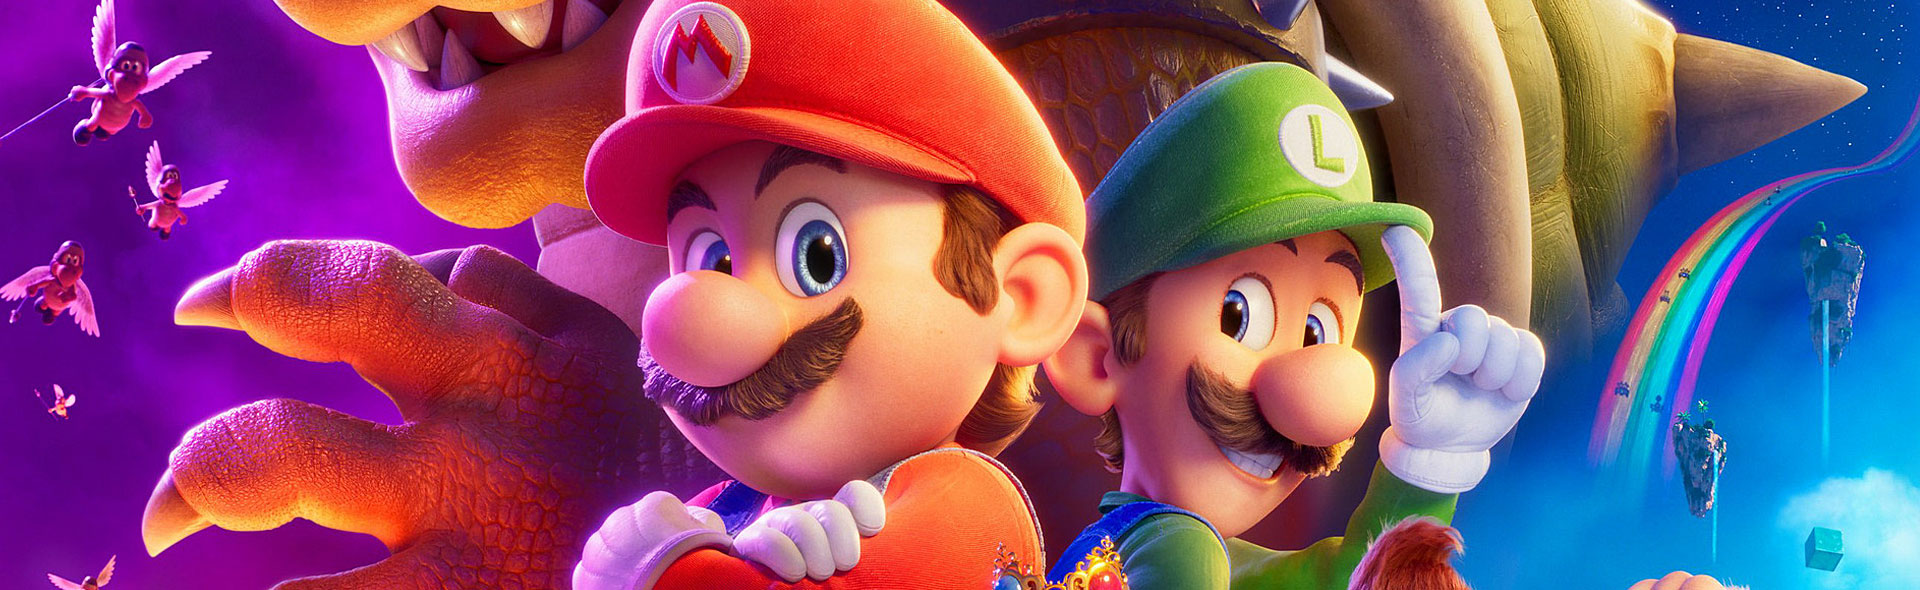 Super Mario Bros. Filmen - Med dansk tale_slide_poster